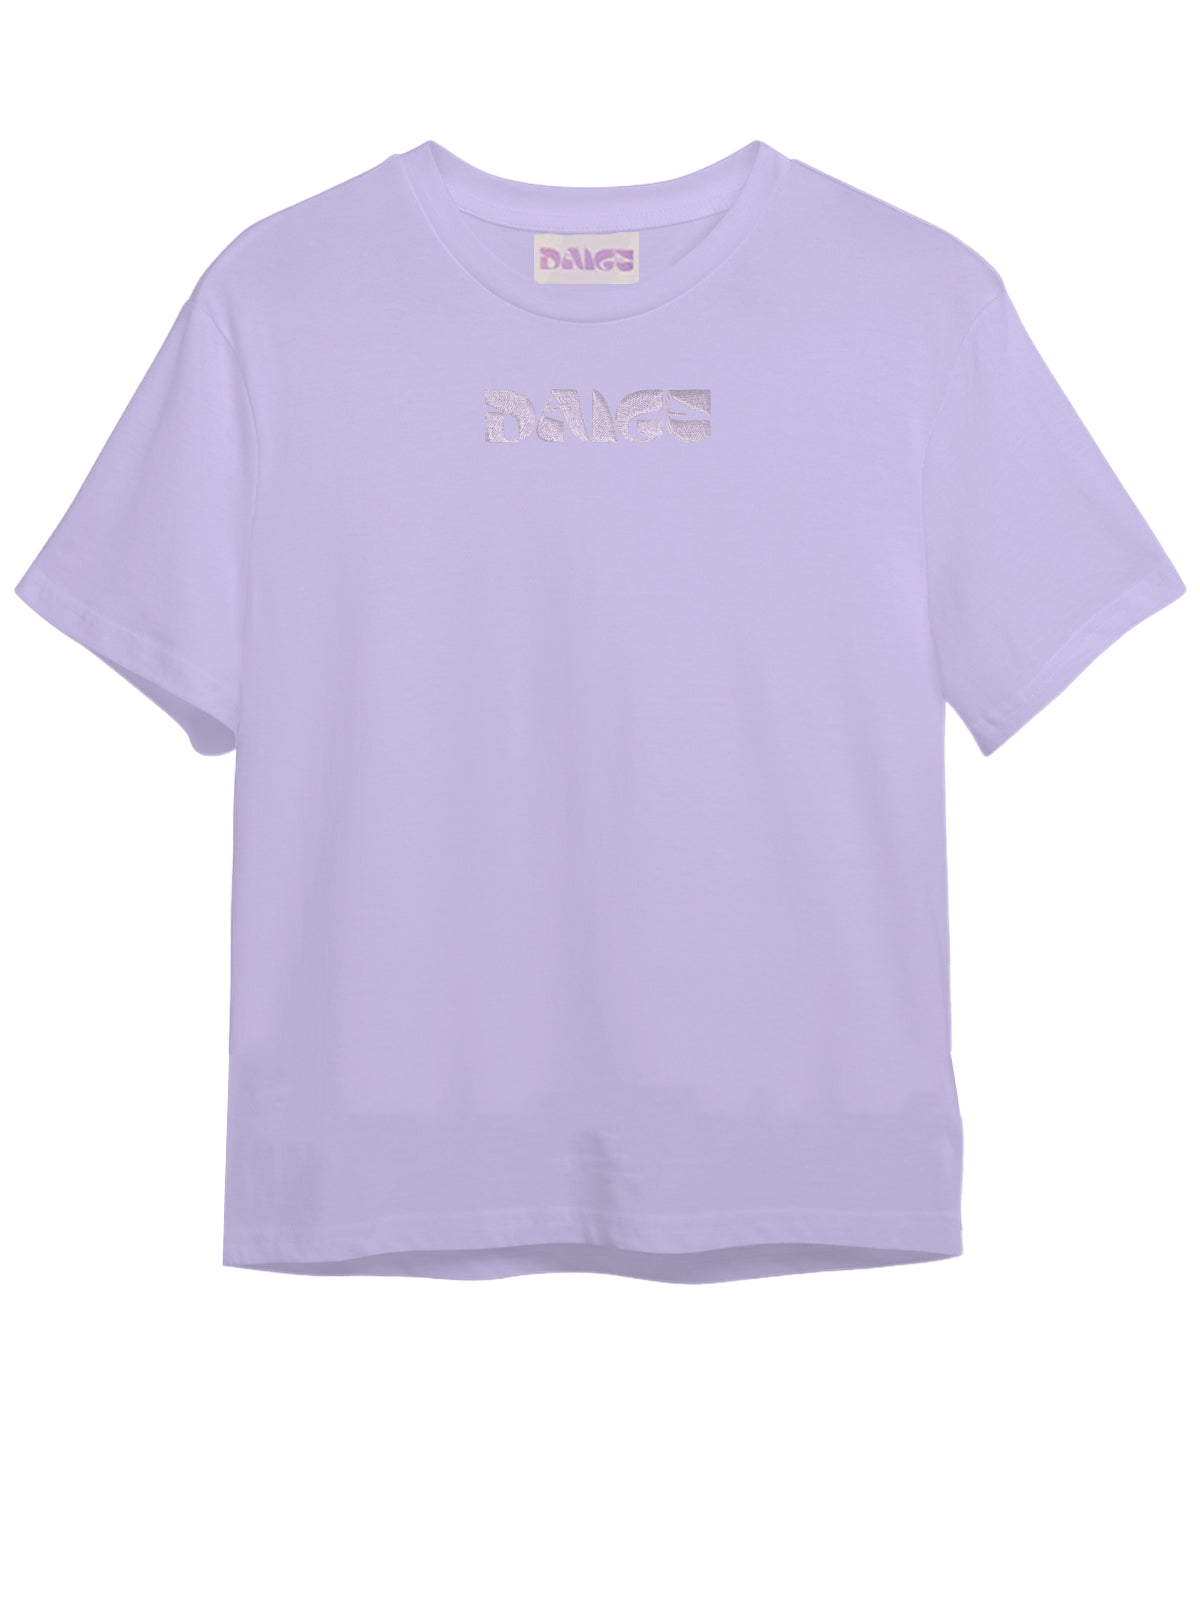 DAIGE logo t-shirt - Parma lilac